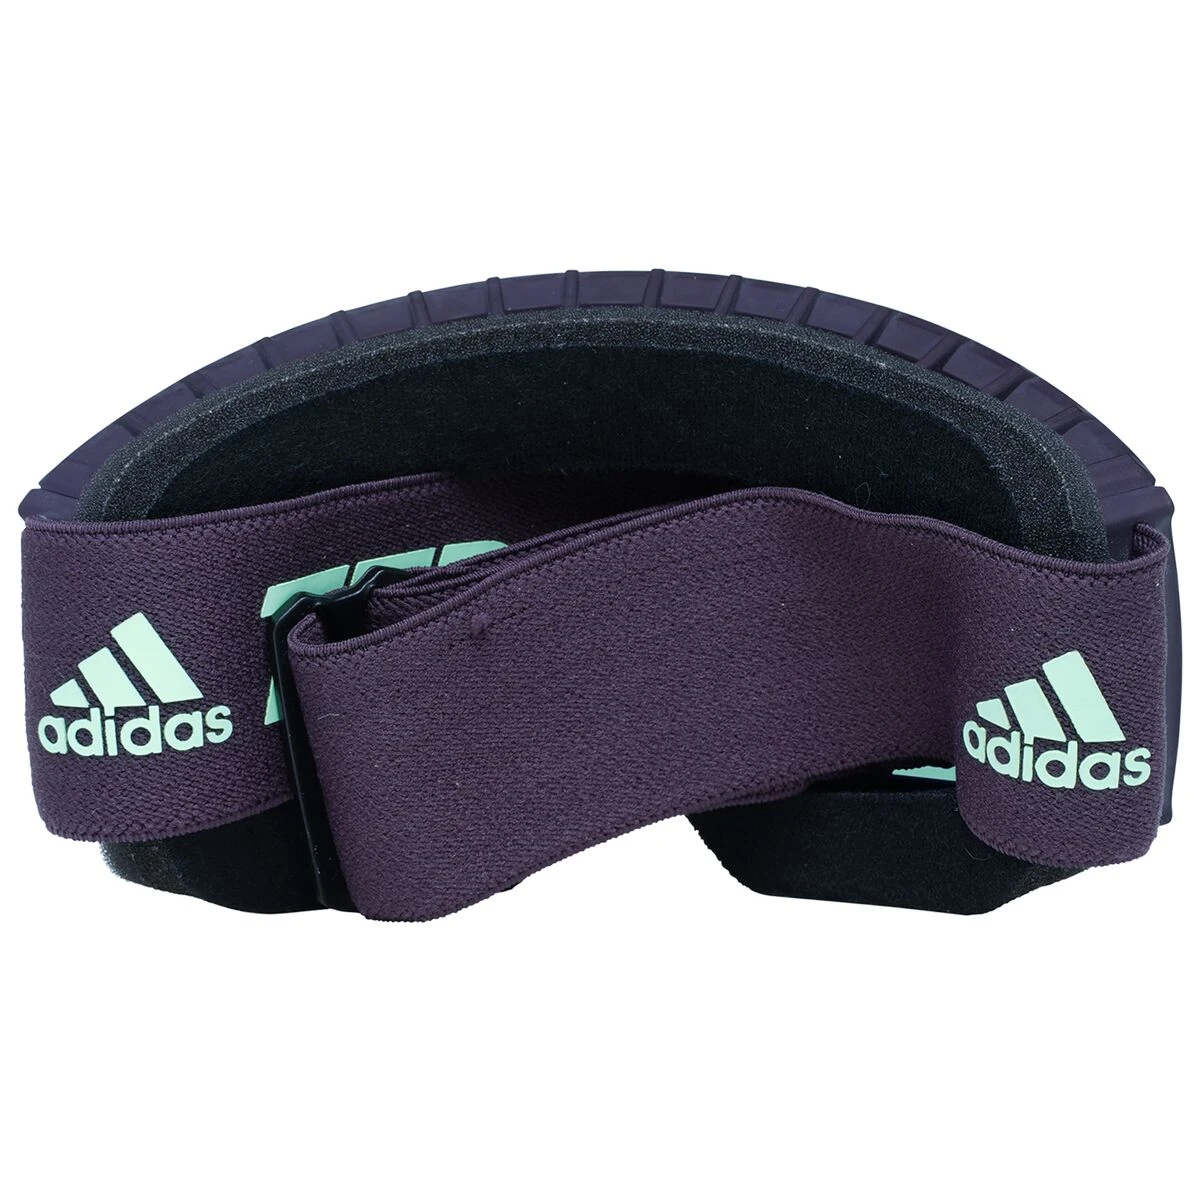 Purple adidas weightlifting belt